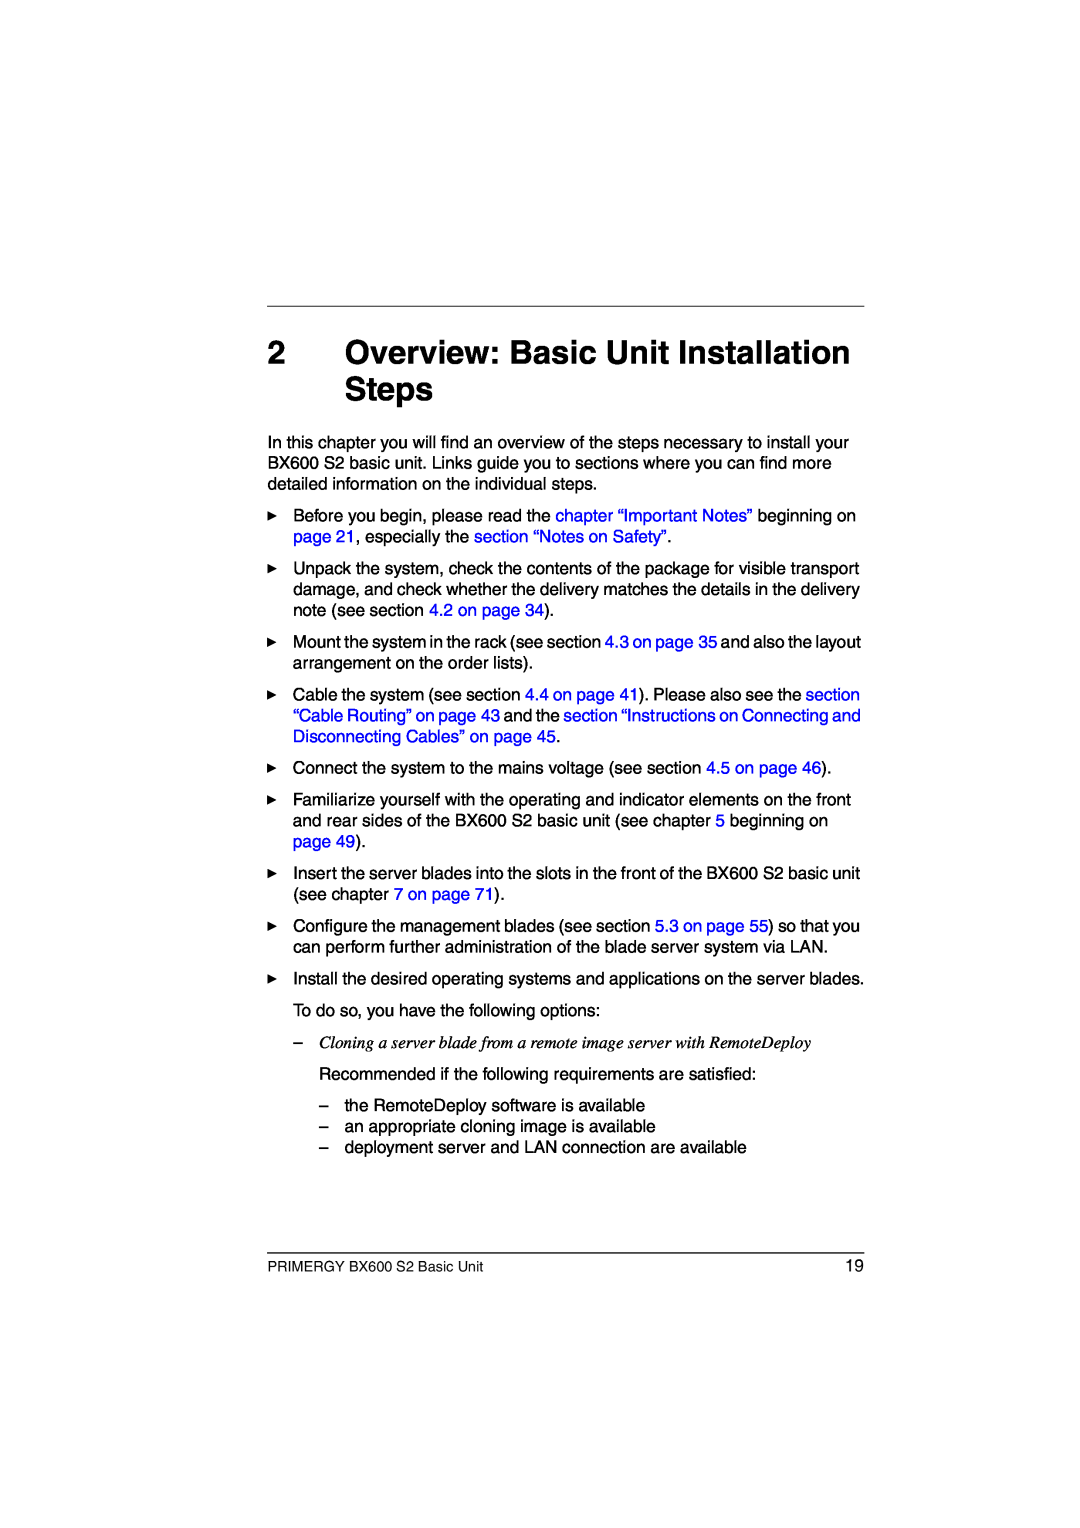 Fujitsu BX600 S2 manual Overview Basic Unit Installation Steps 